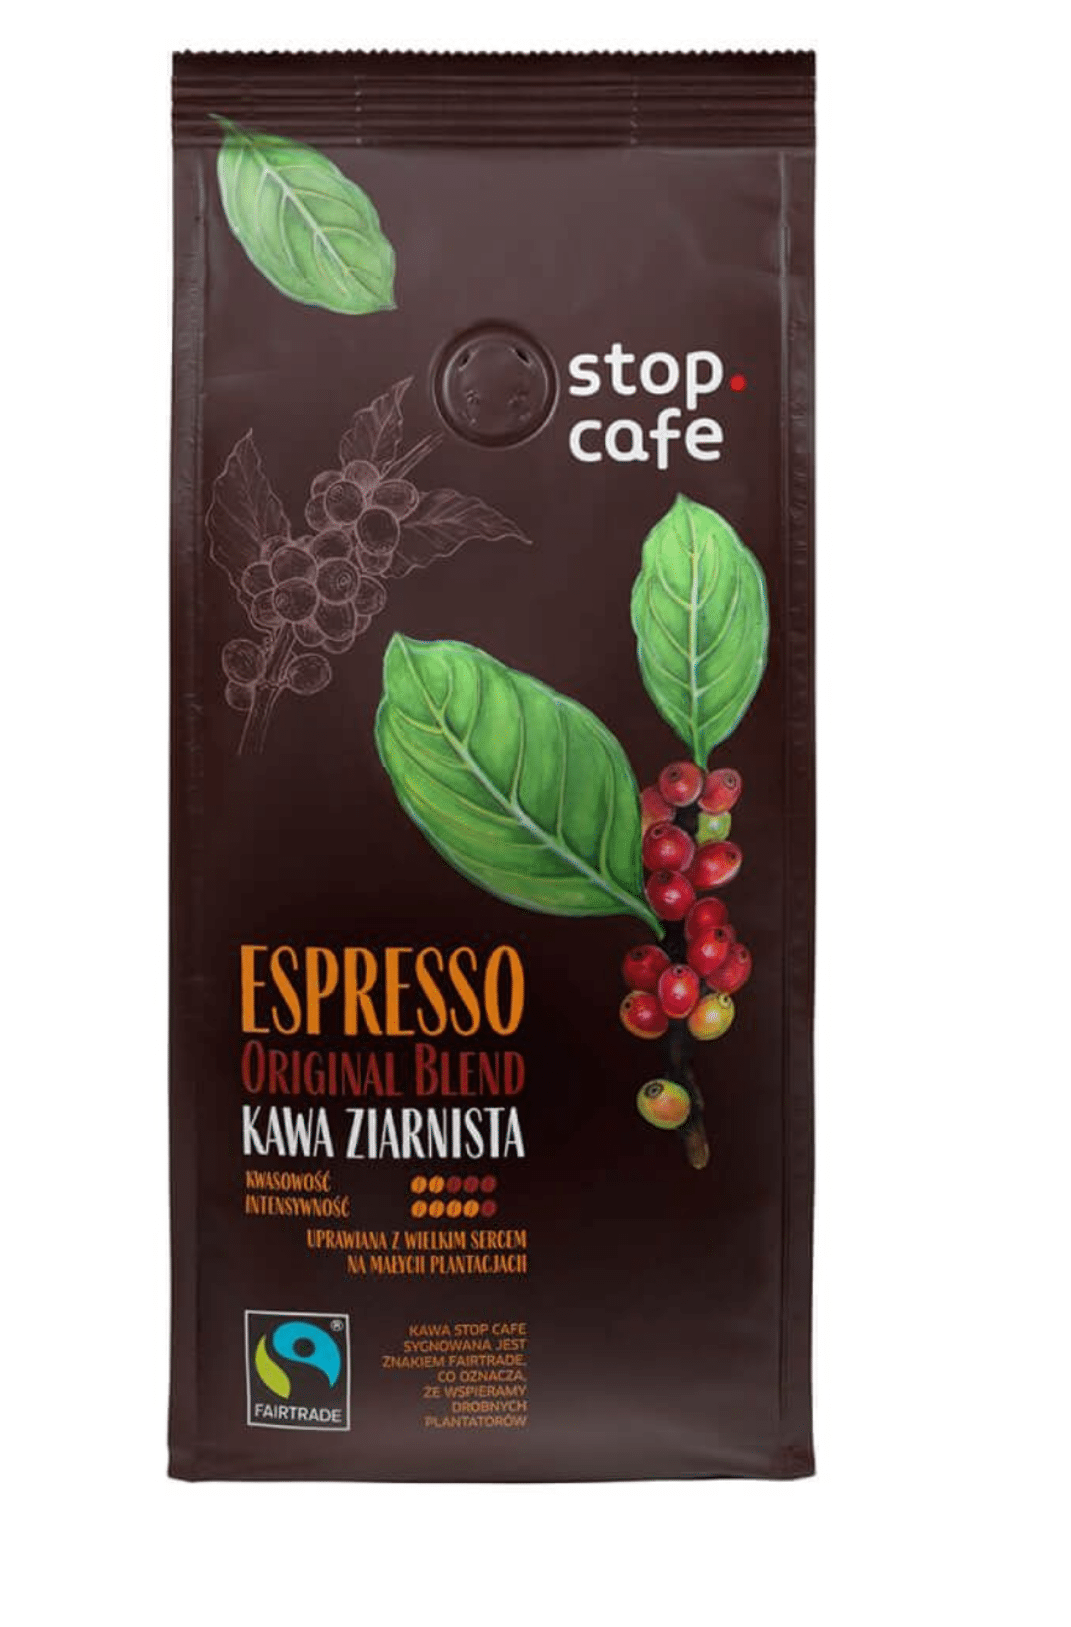 Kawa Ziarnista Espresso Original Blend